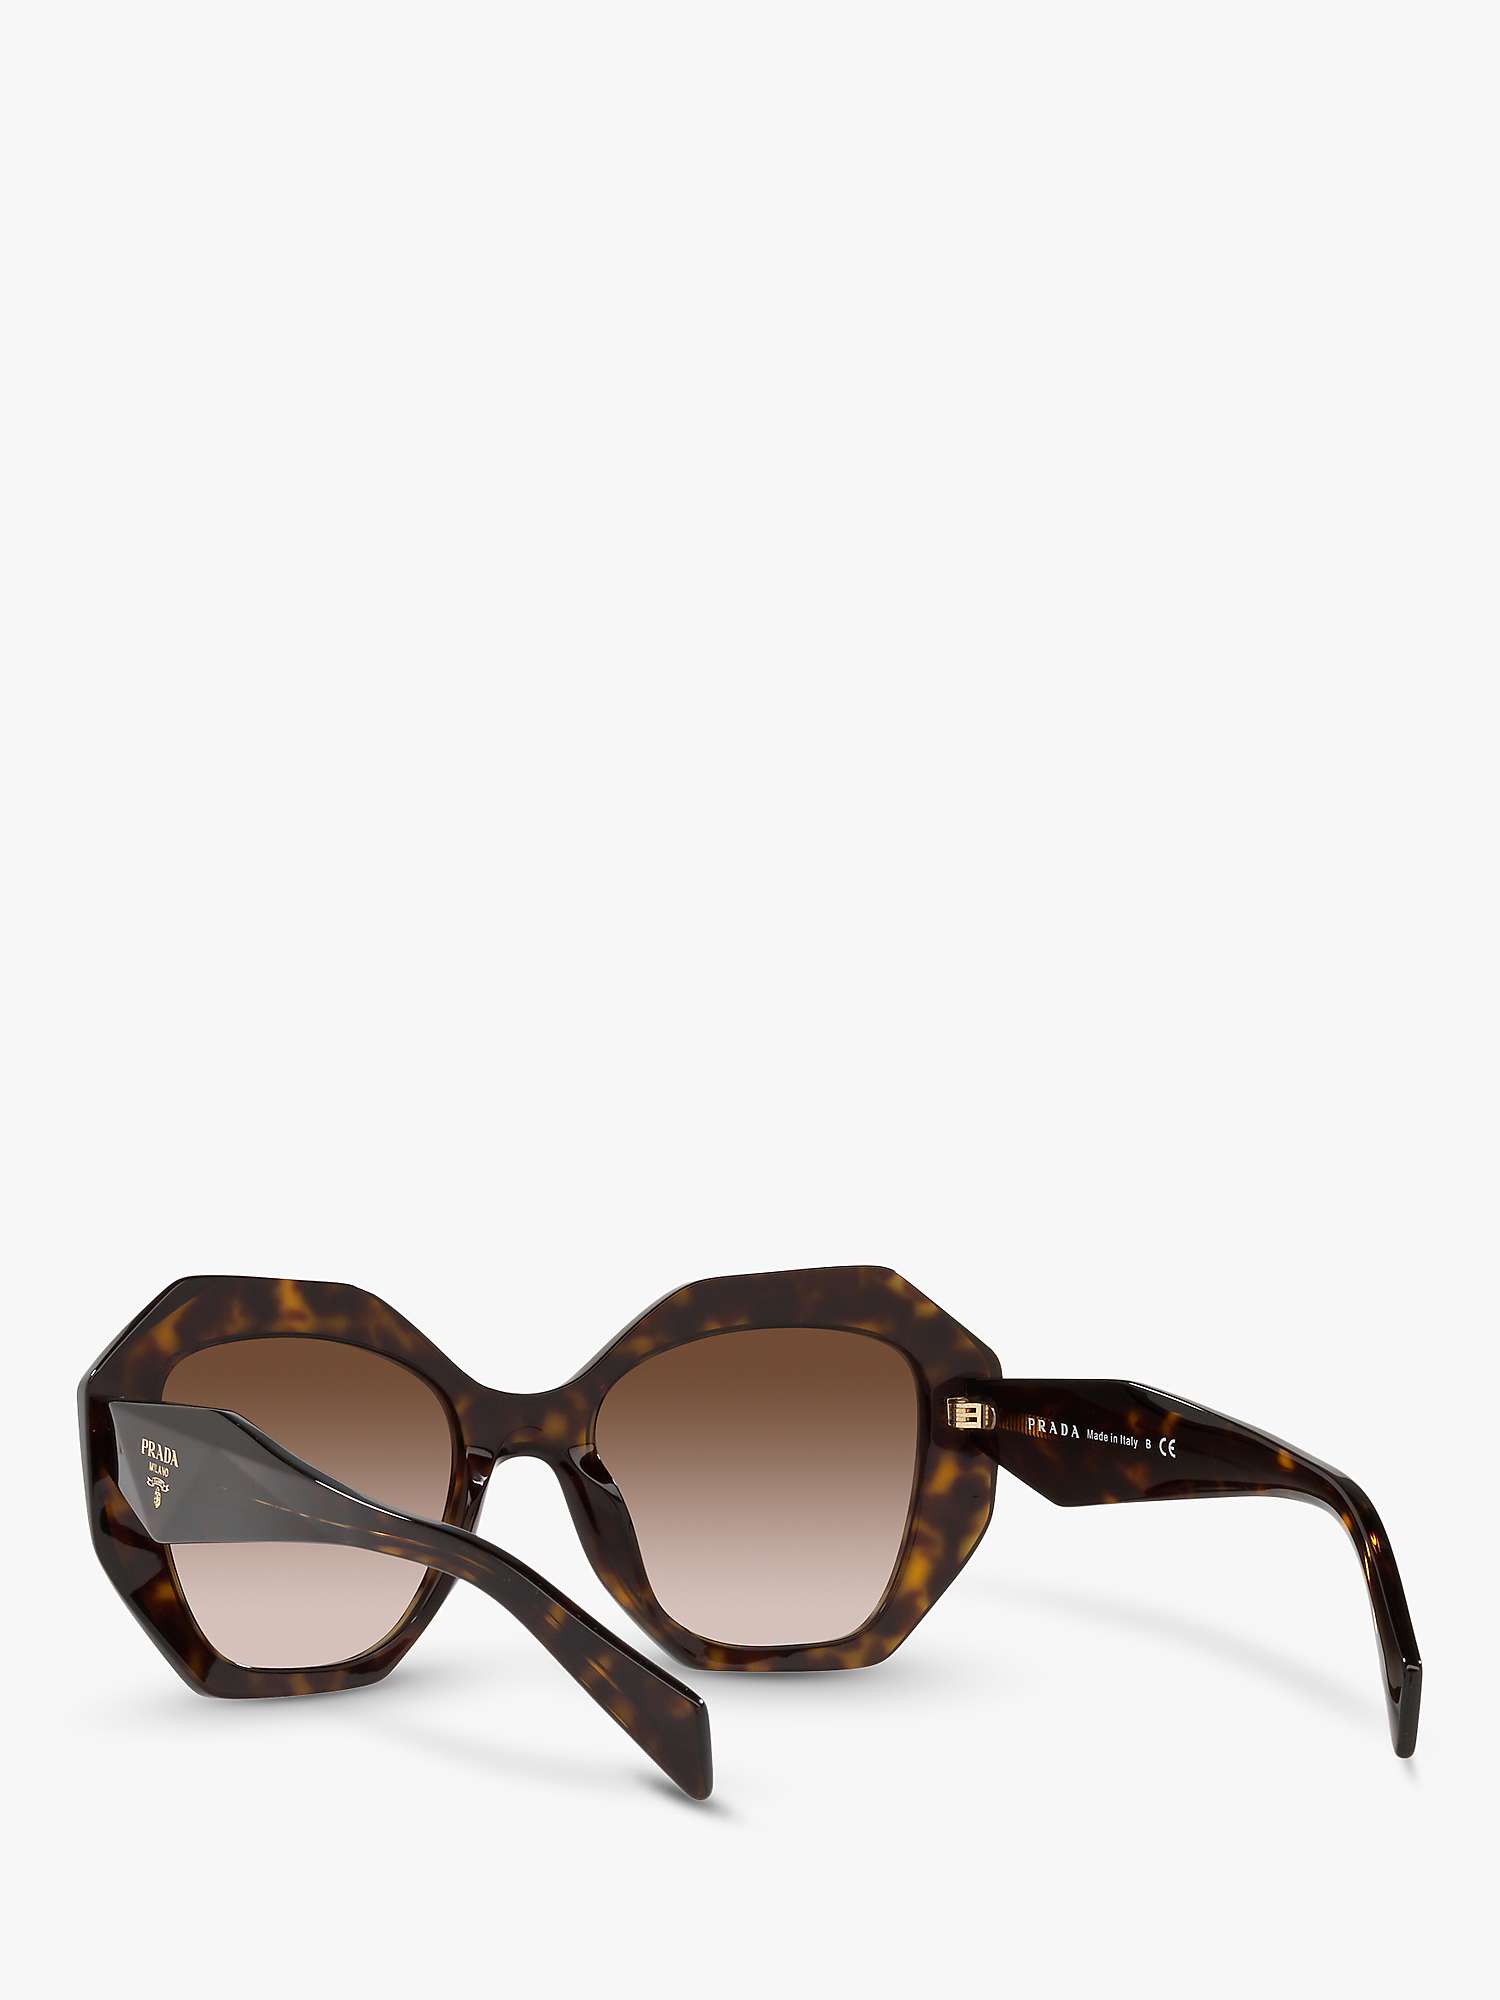 Buy Prada PR 16WS Women's Irregular Shaped Sunglasses Online at johnlewis.com